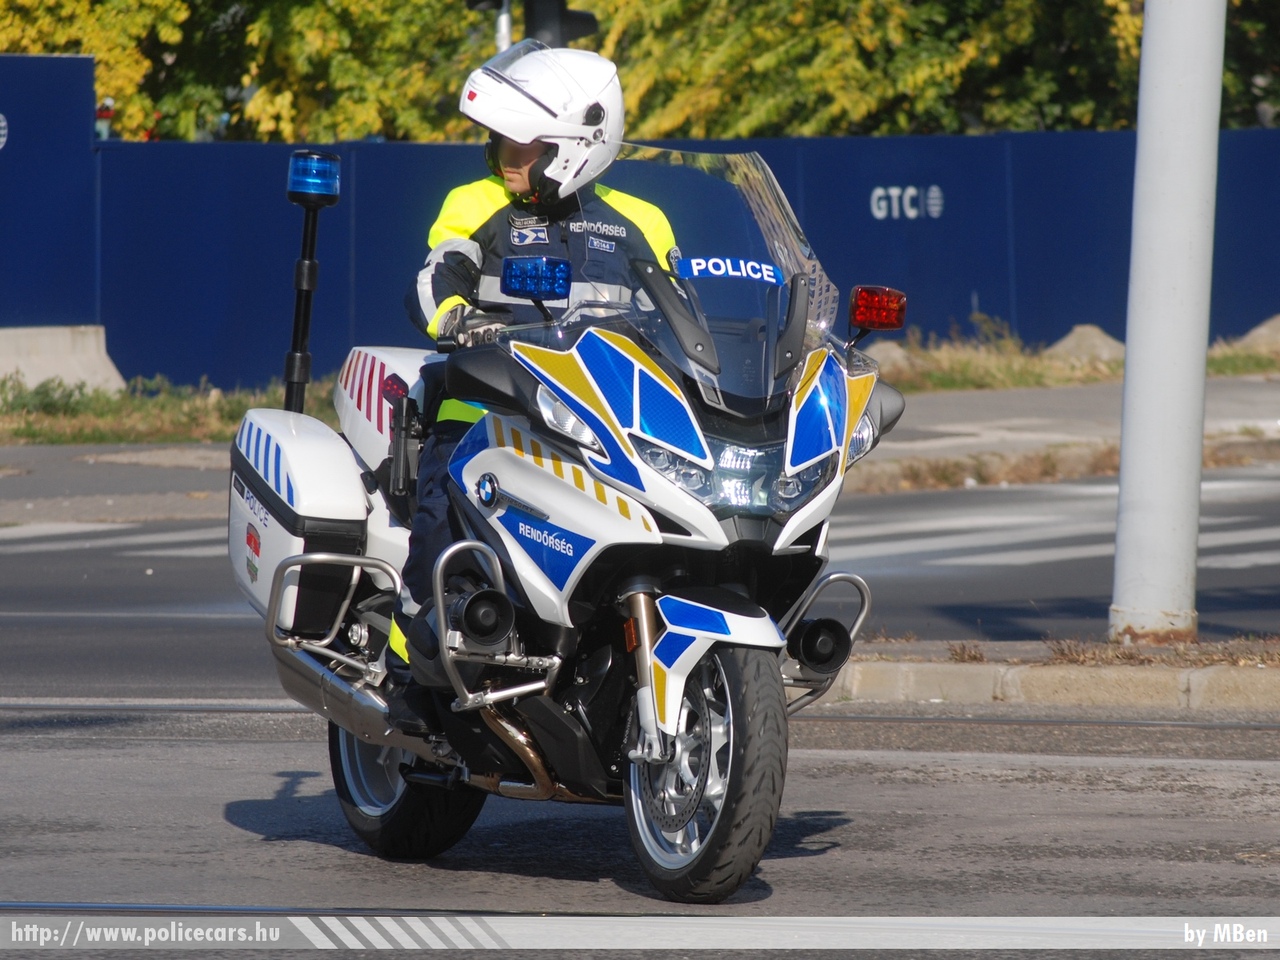 BMW R1250RT, fotó: MBen
Keywords: motor rendőr rendőrmotor rendőrség magyar Magyarország police Hungary hungarian policebike policemotorcycle